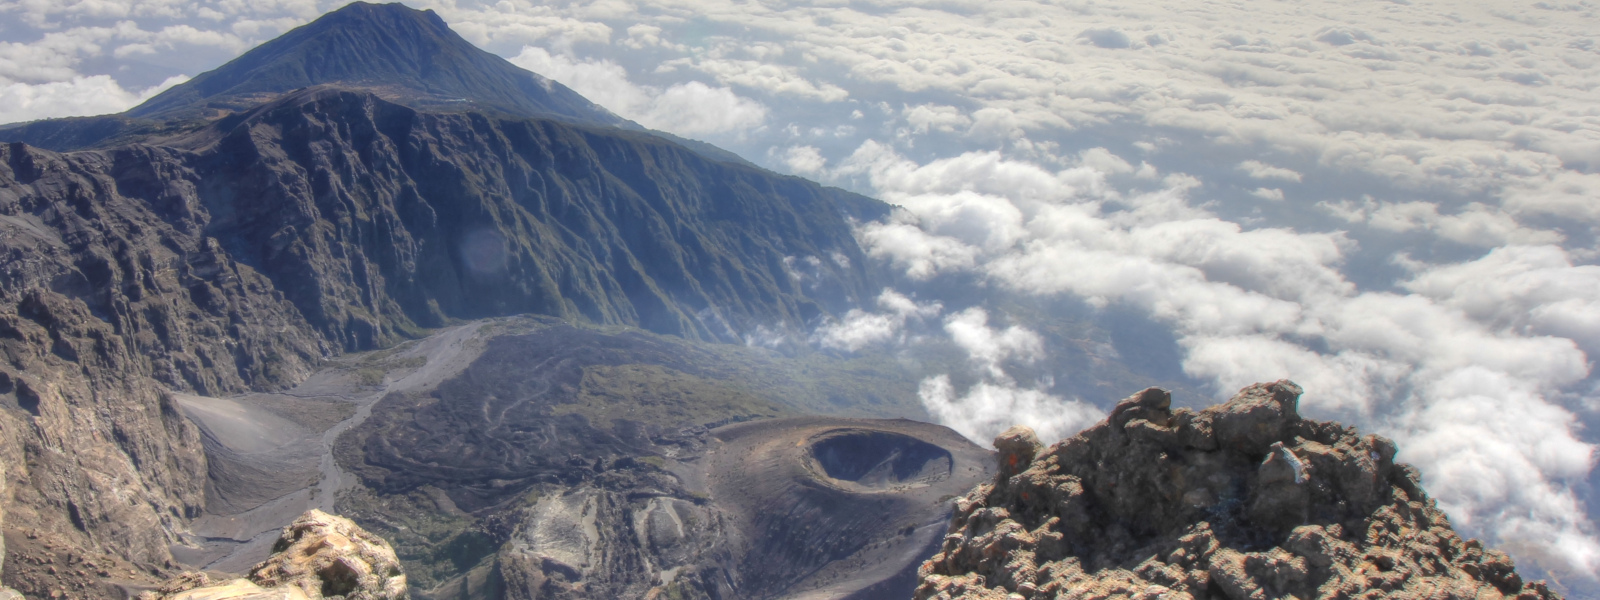 Mount Meru Climbing